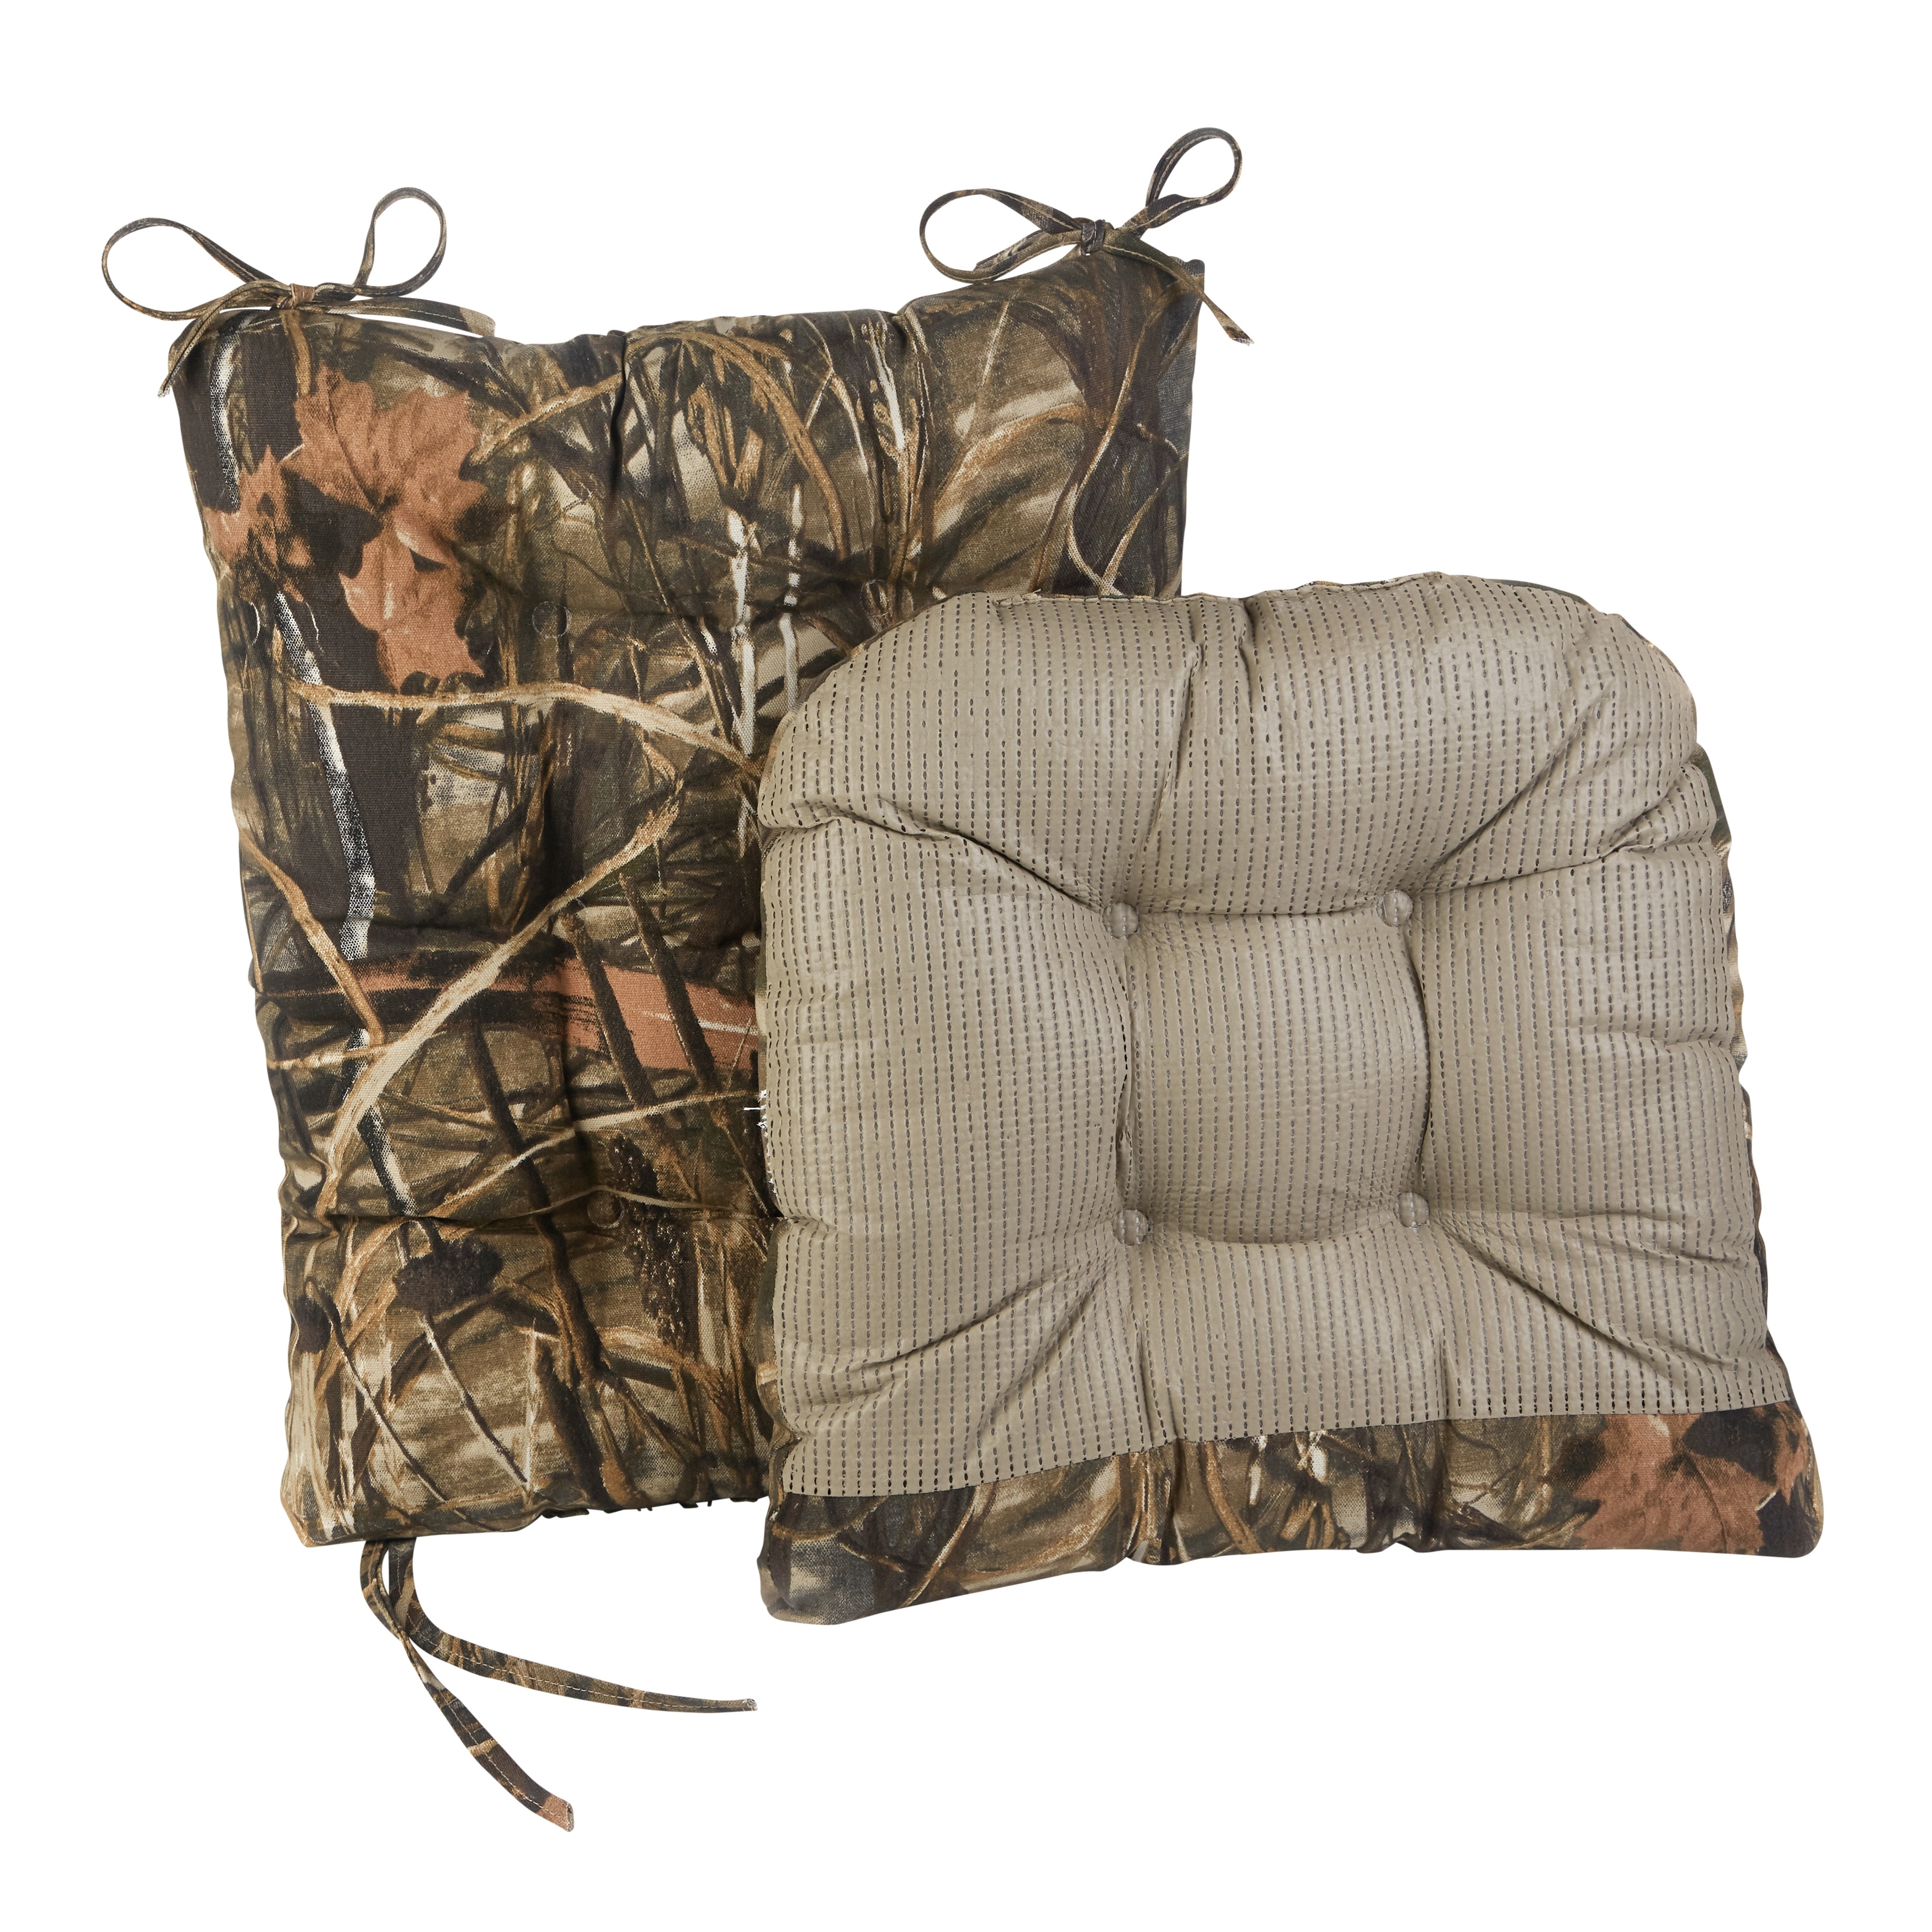 Lelestar Rocking Chair Cushions Papasan Bench Cushion Rectangle